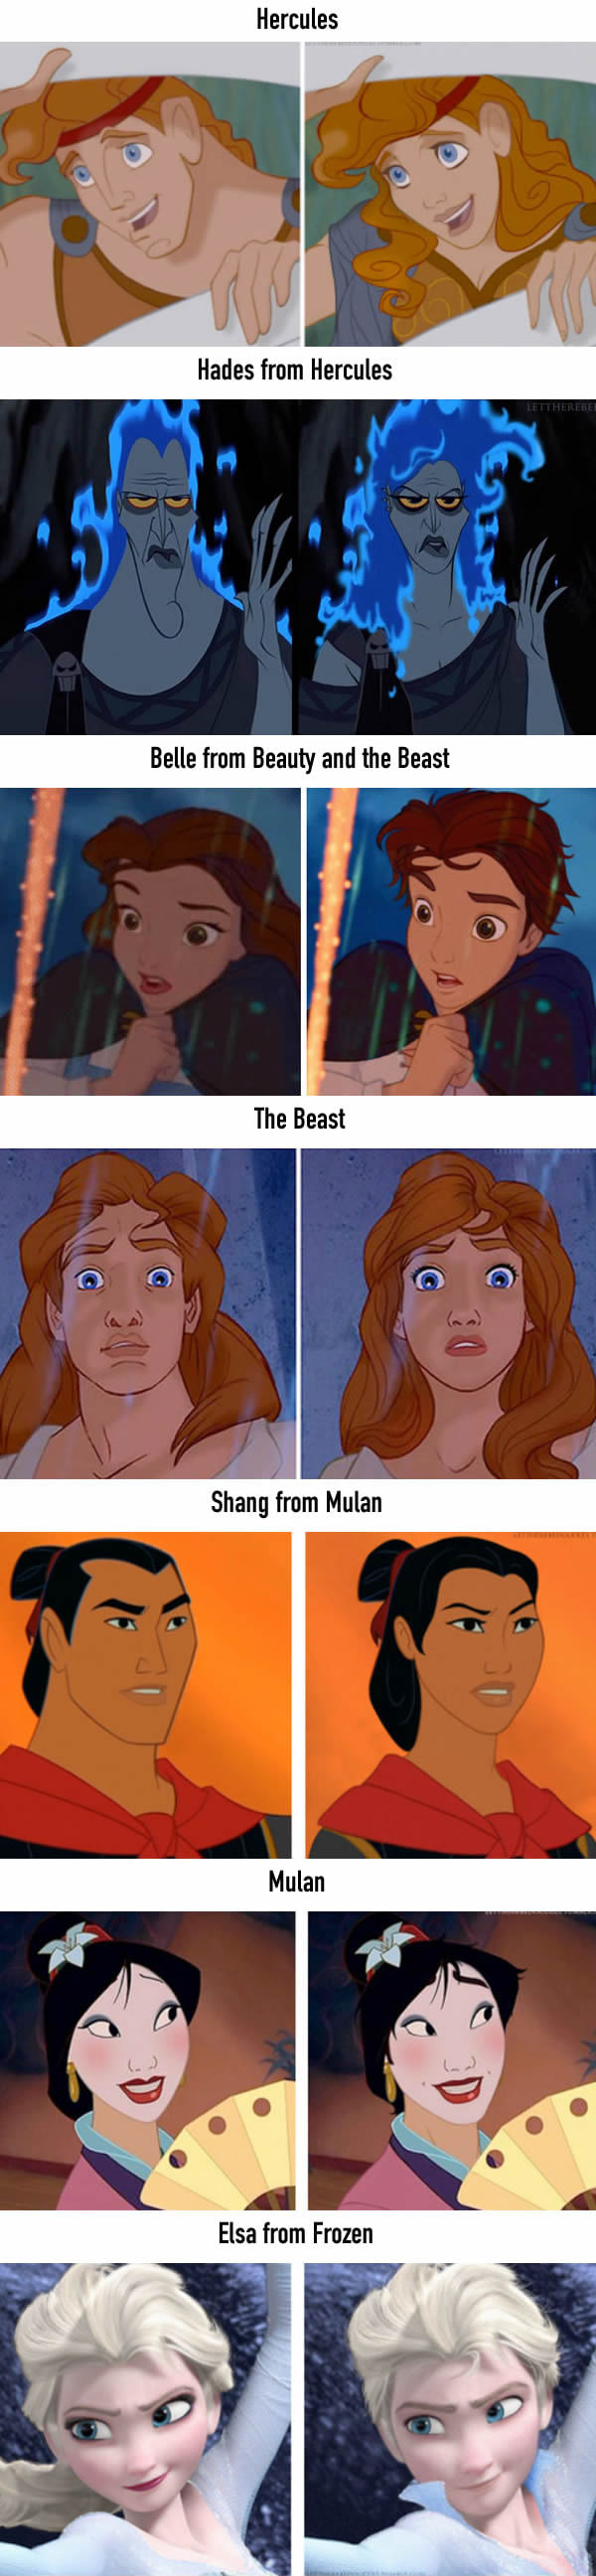 Gender bending with Disney.